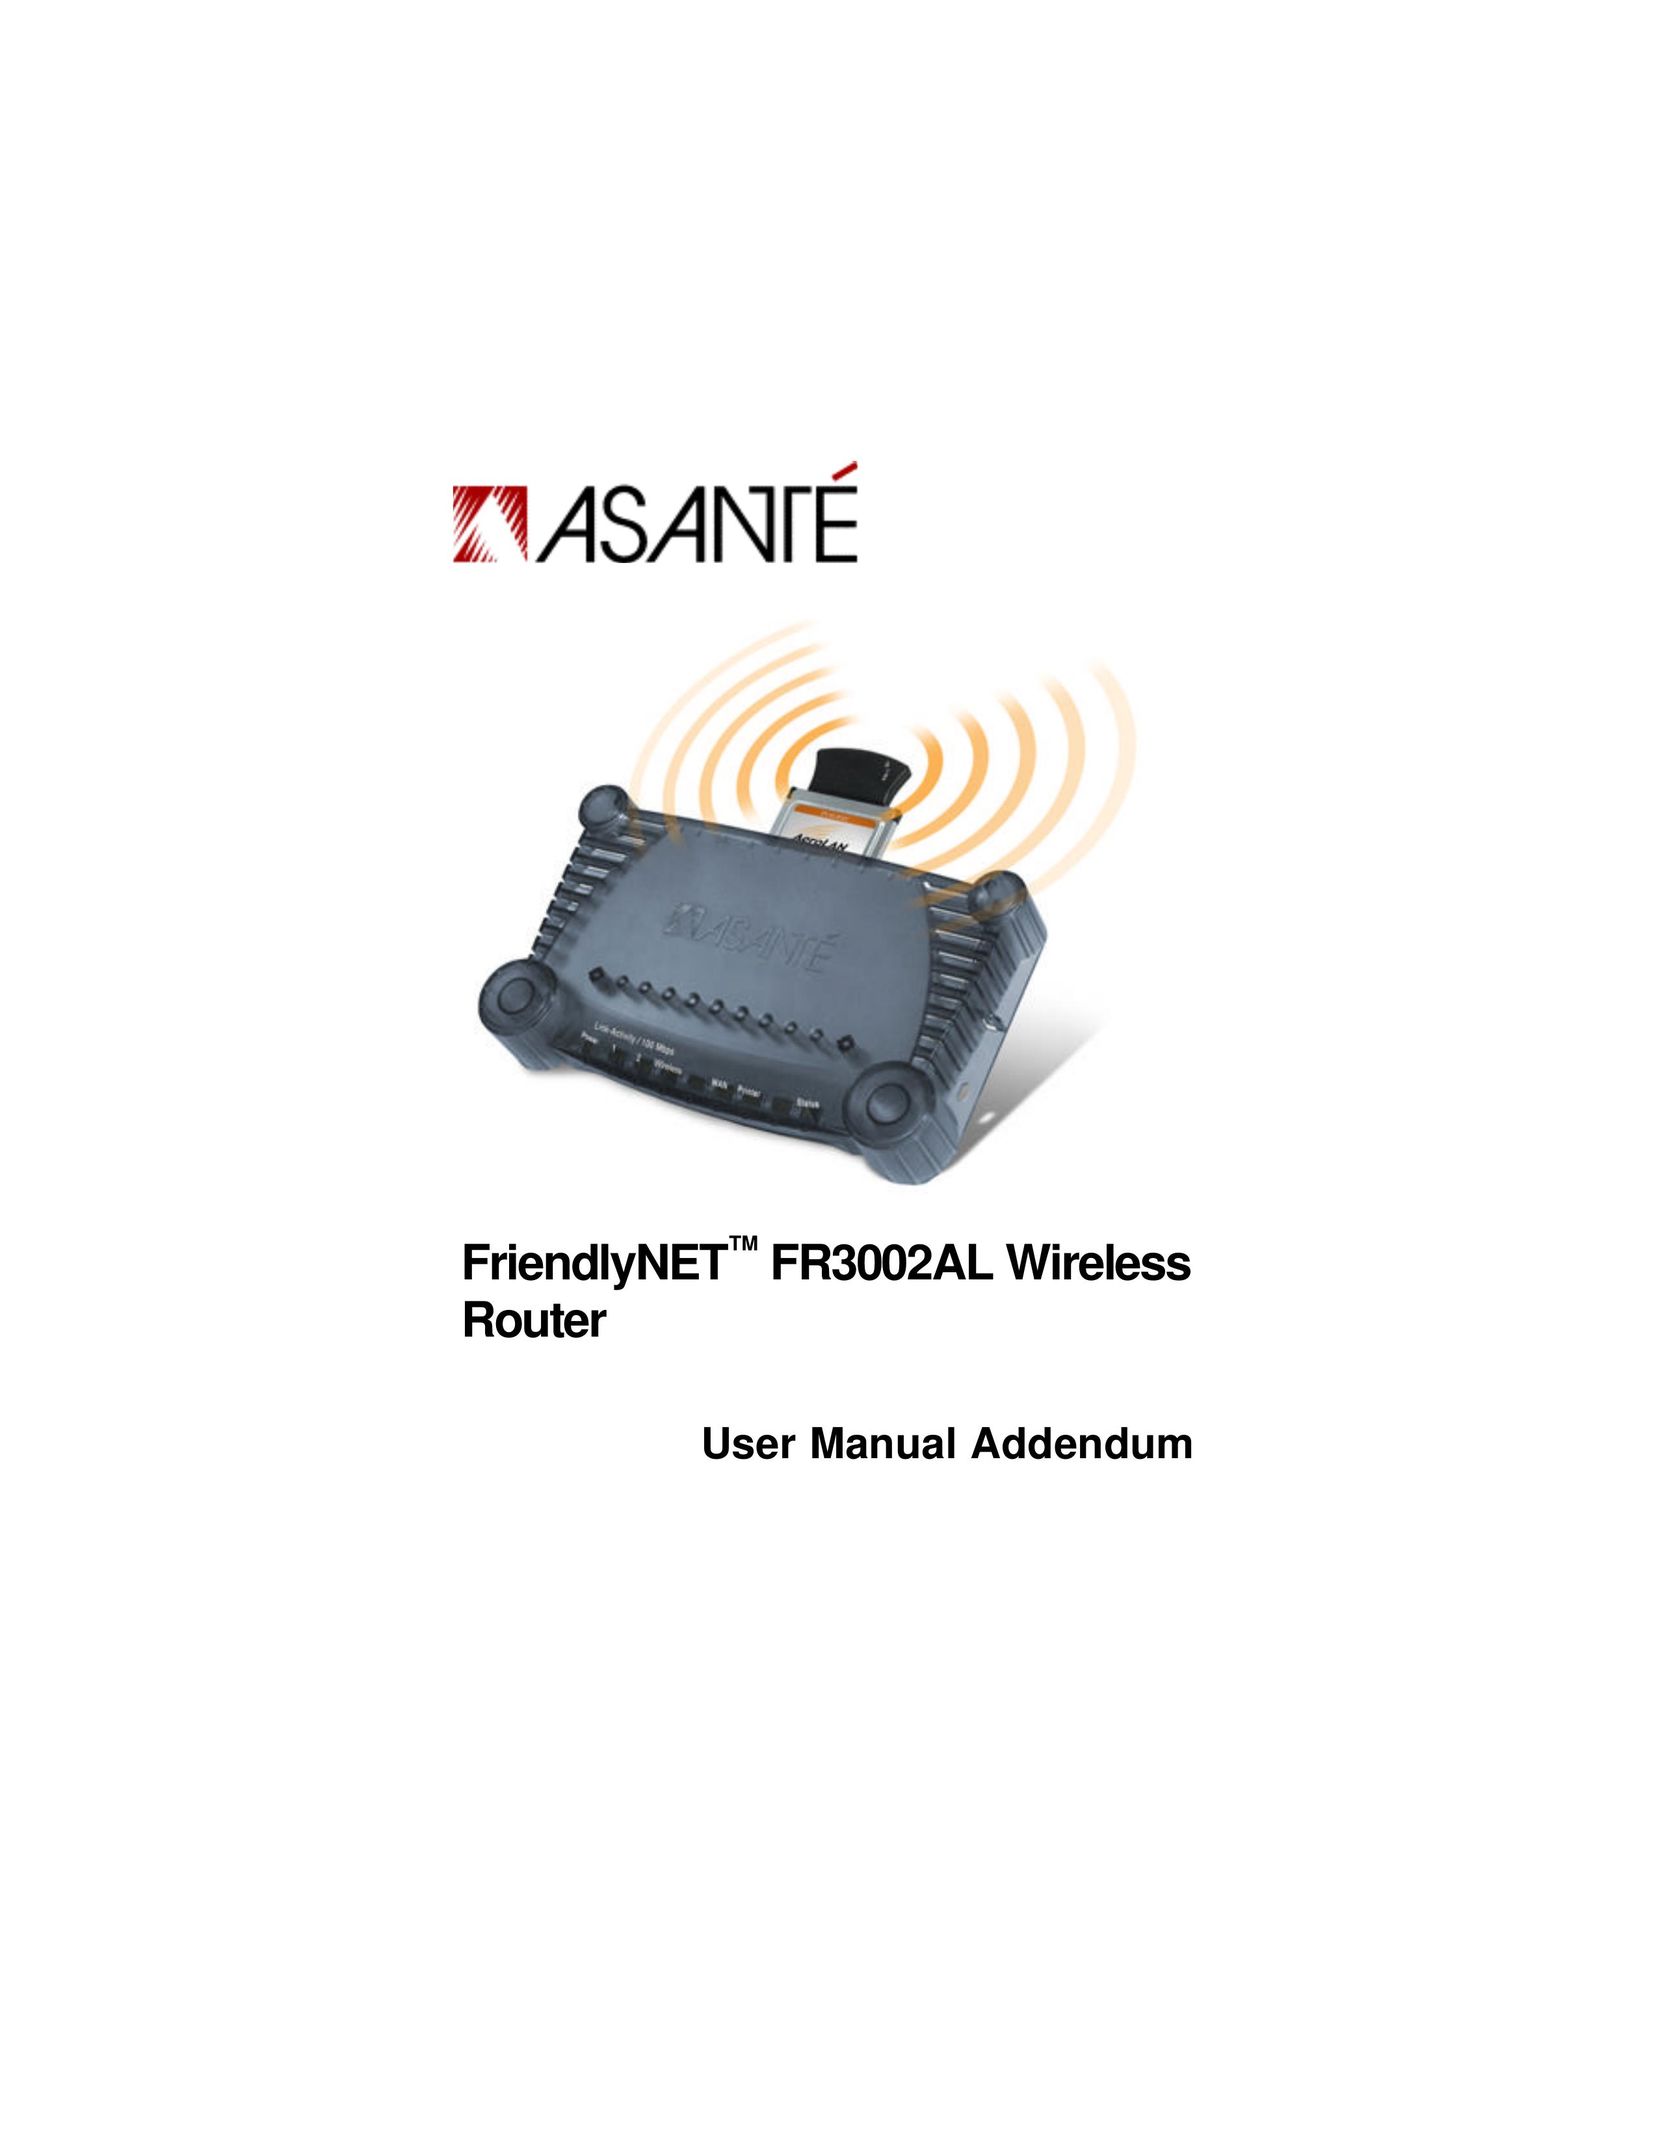 Asante Technologies FR3002AL Network Router User Manual